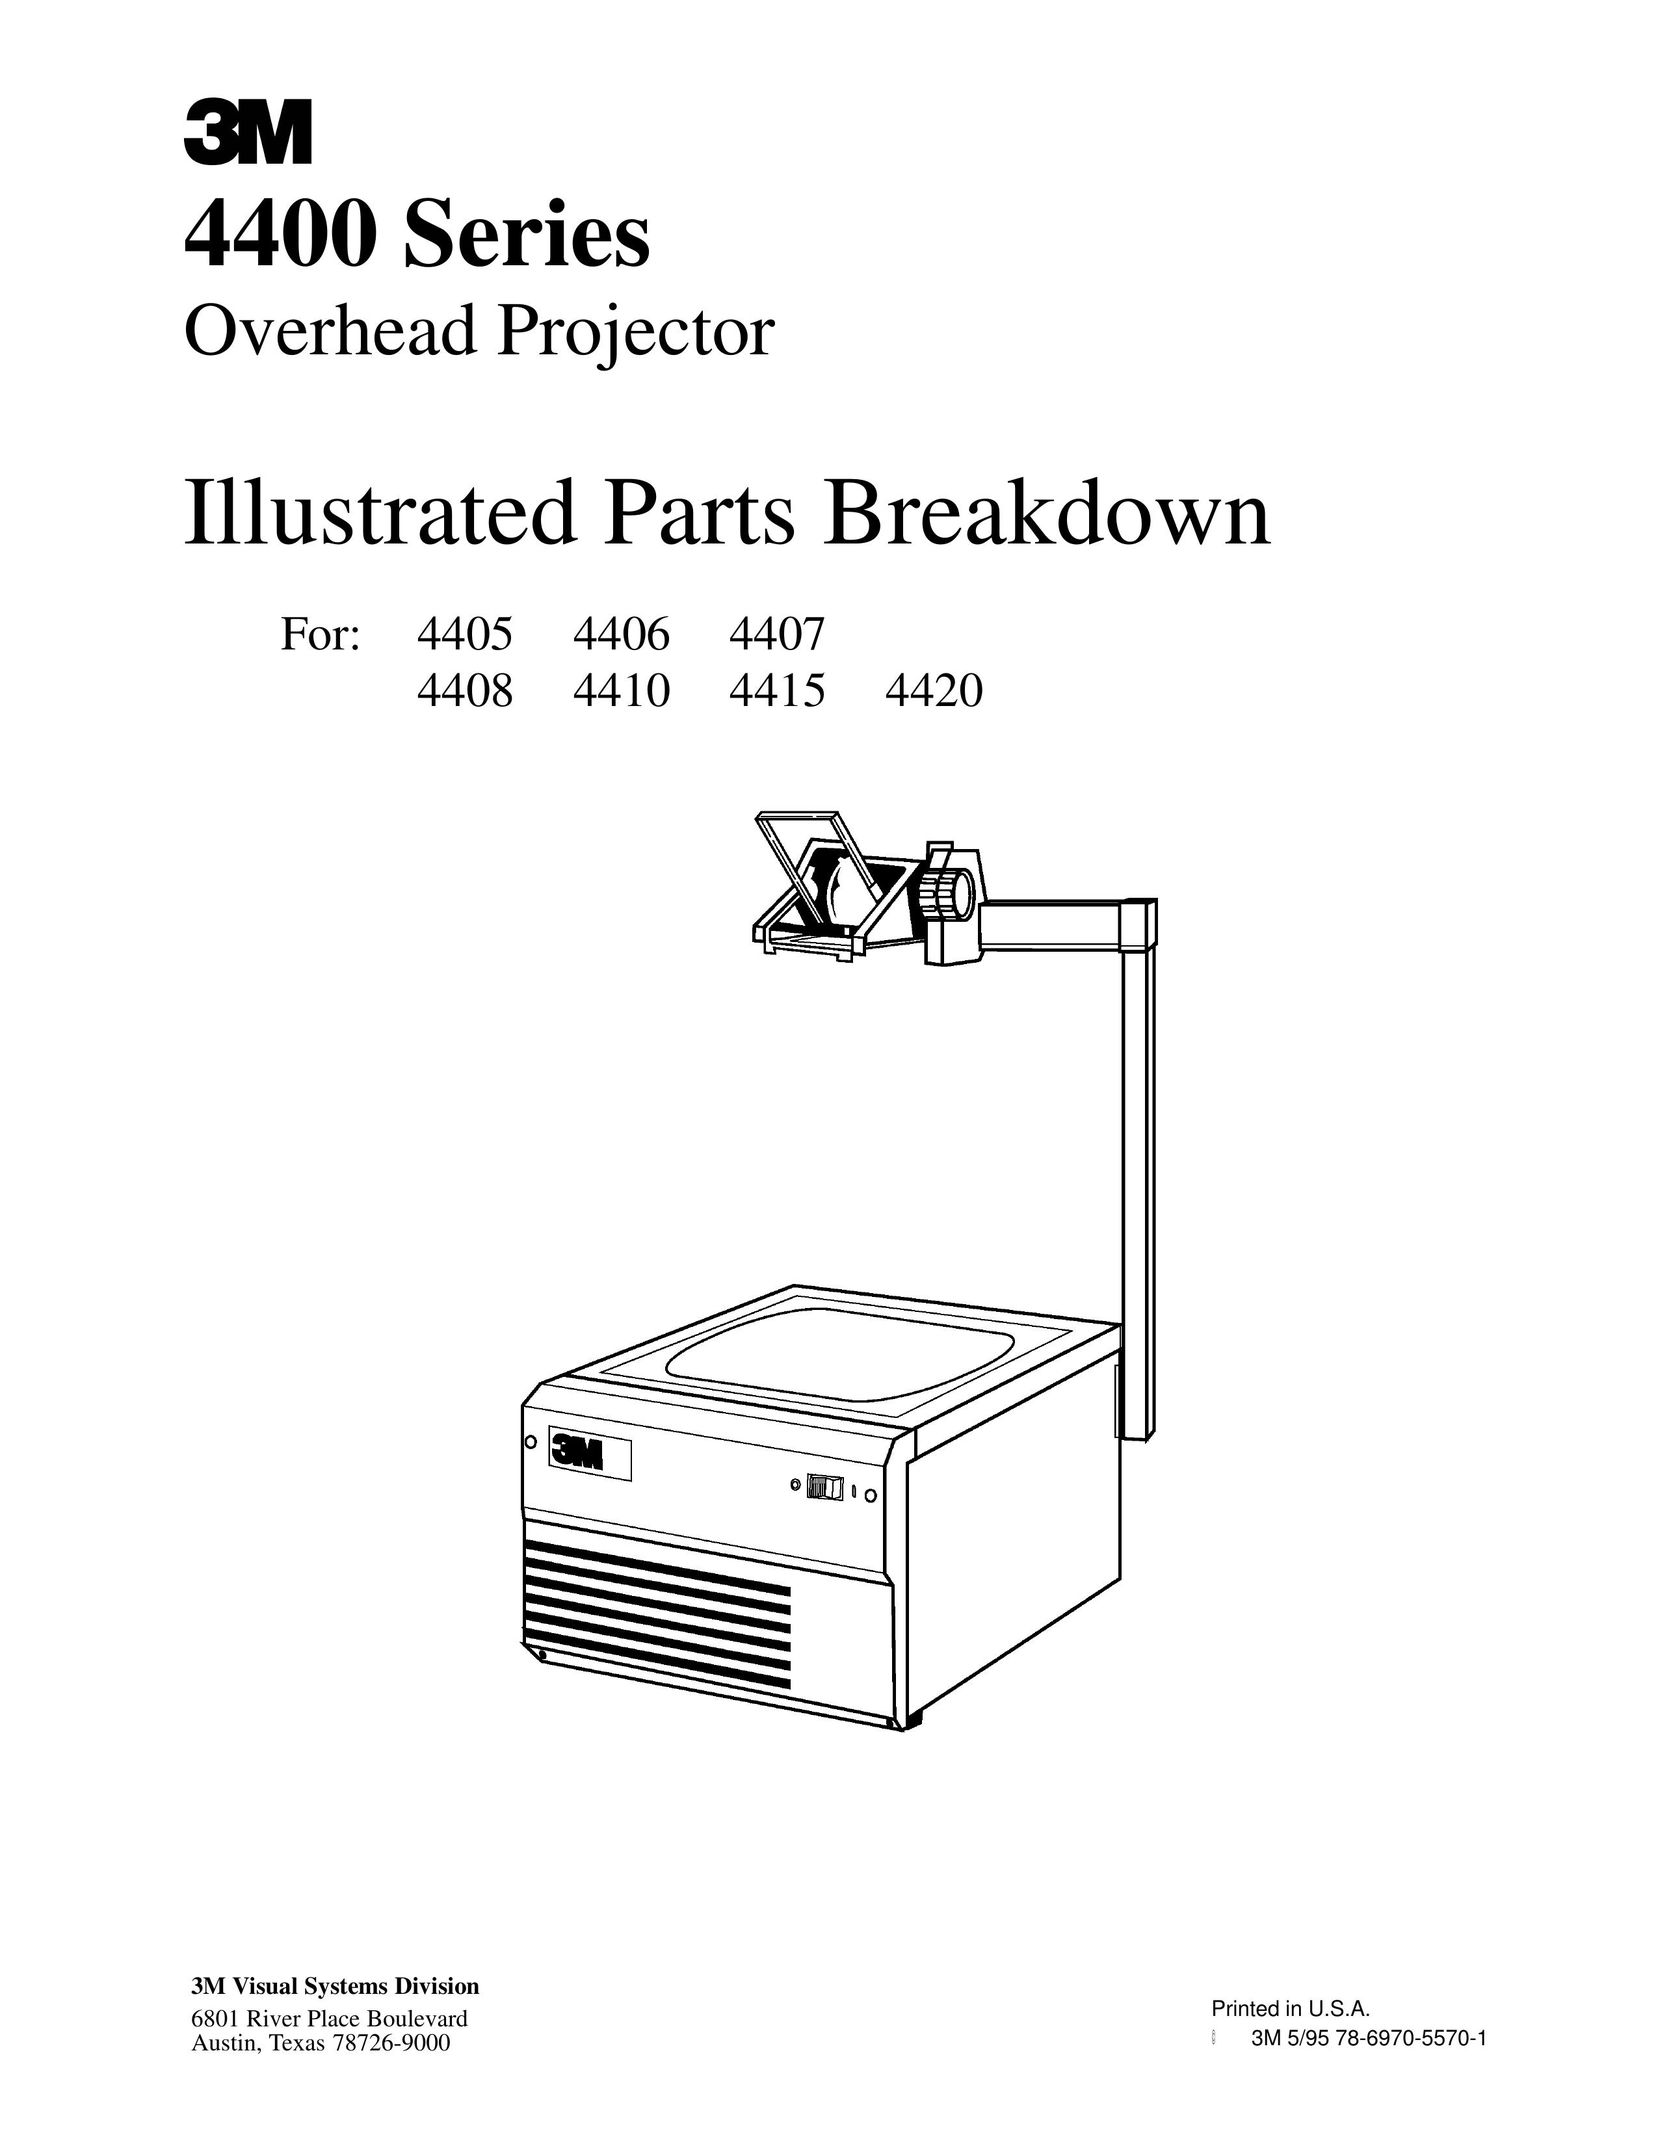 3M 4415 Projector User Manual